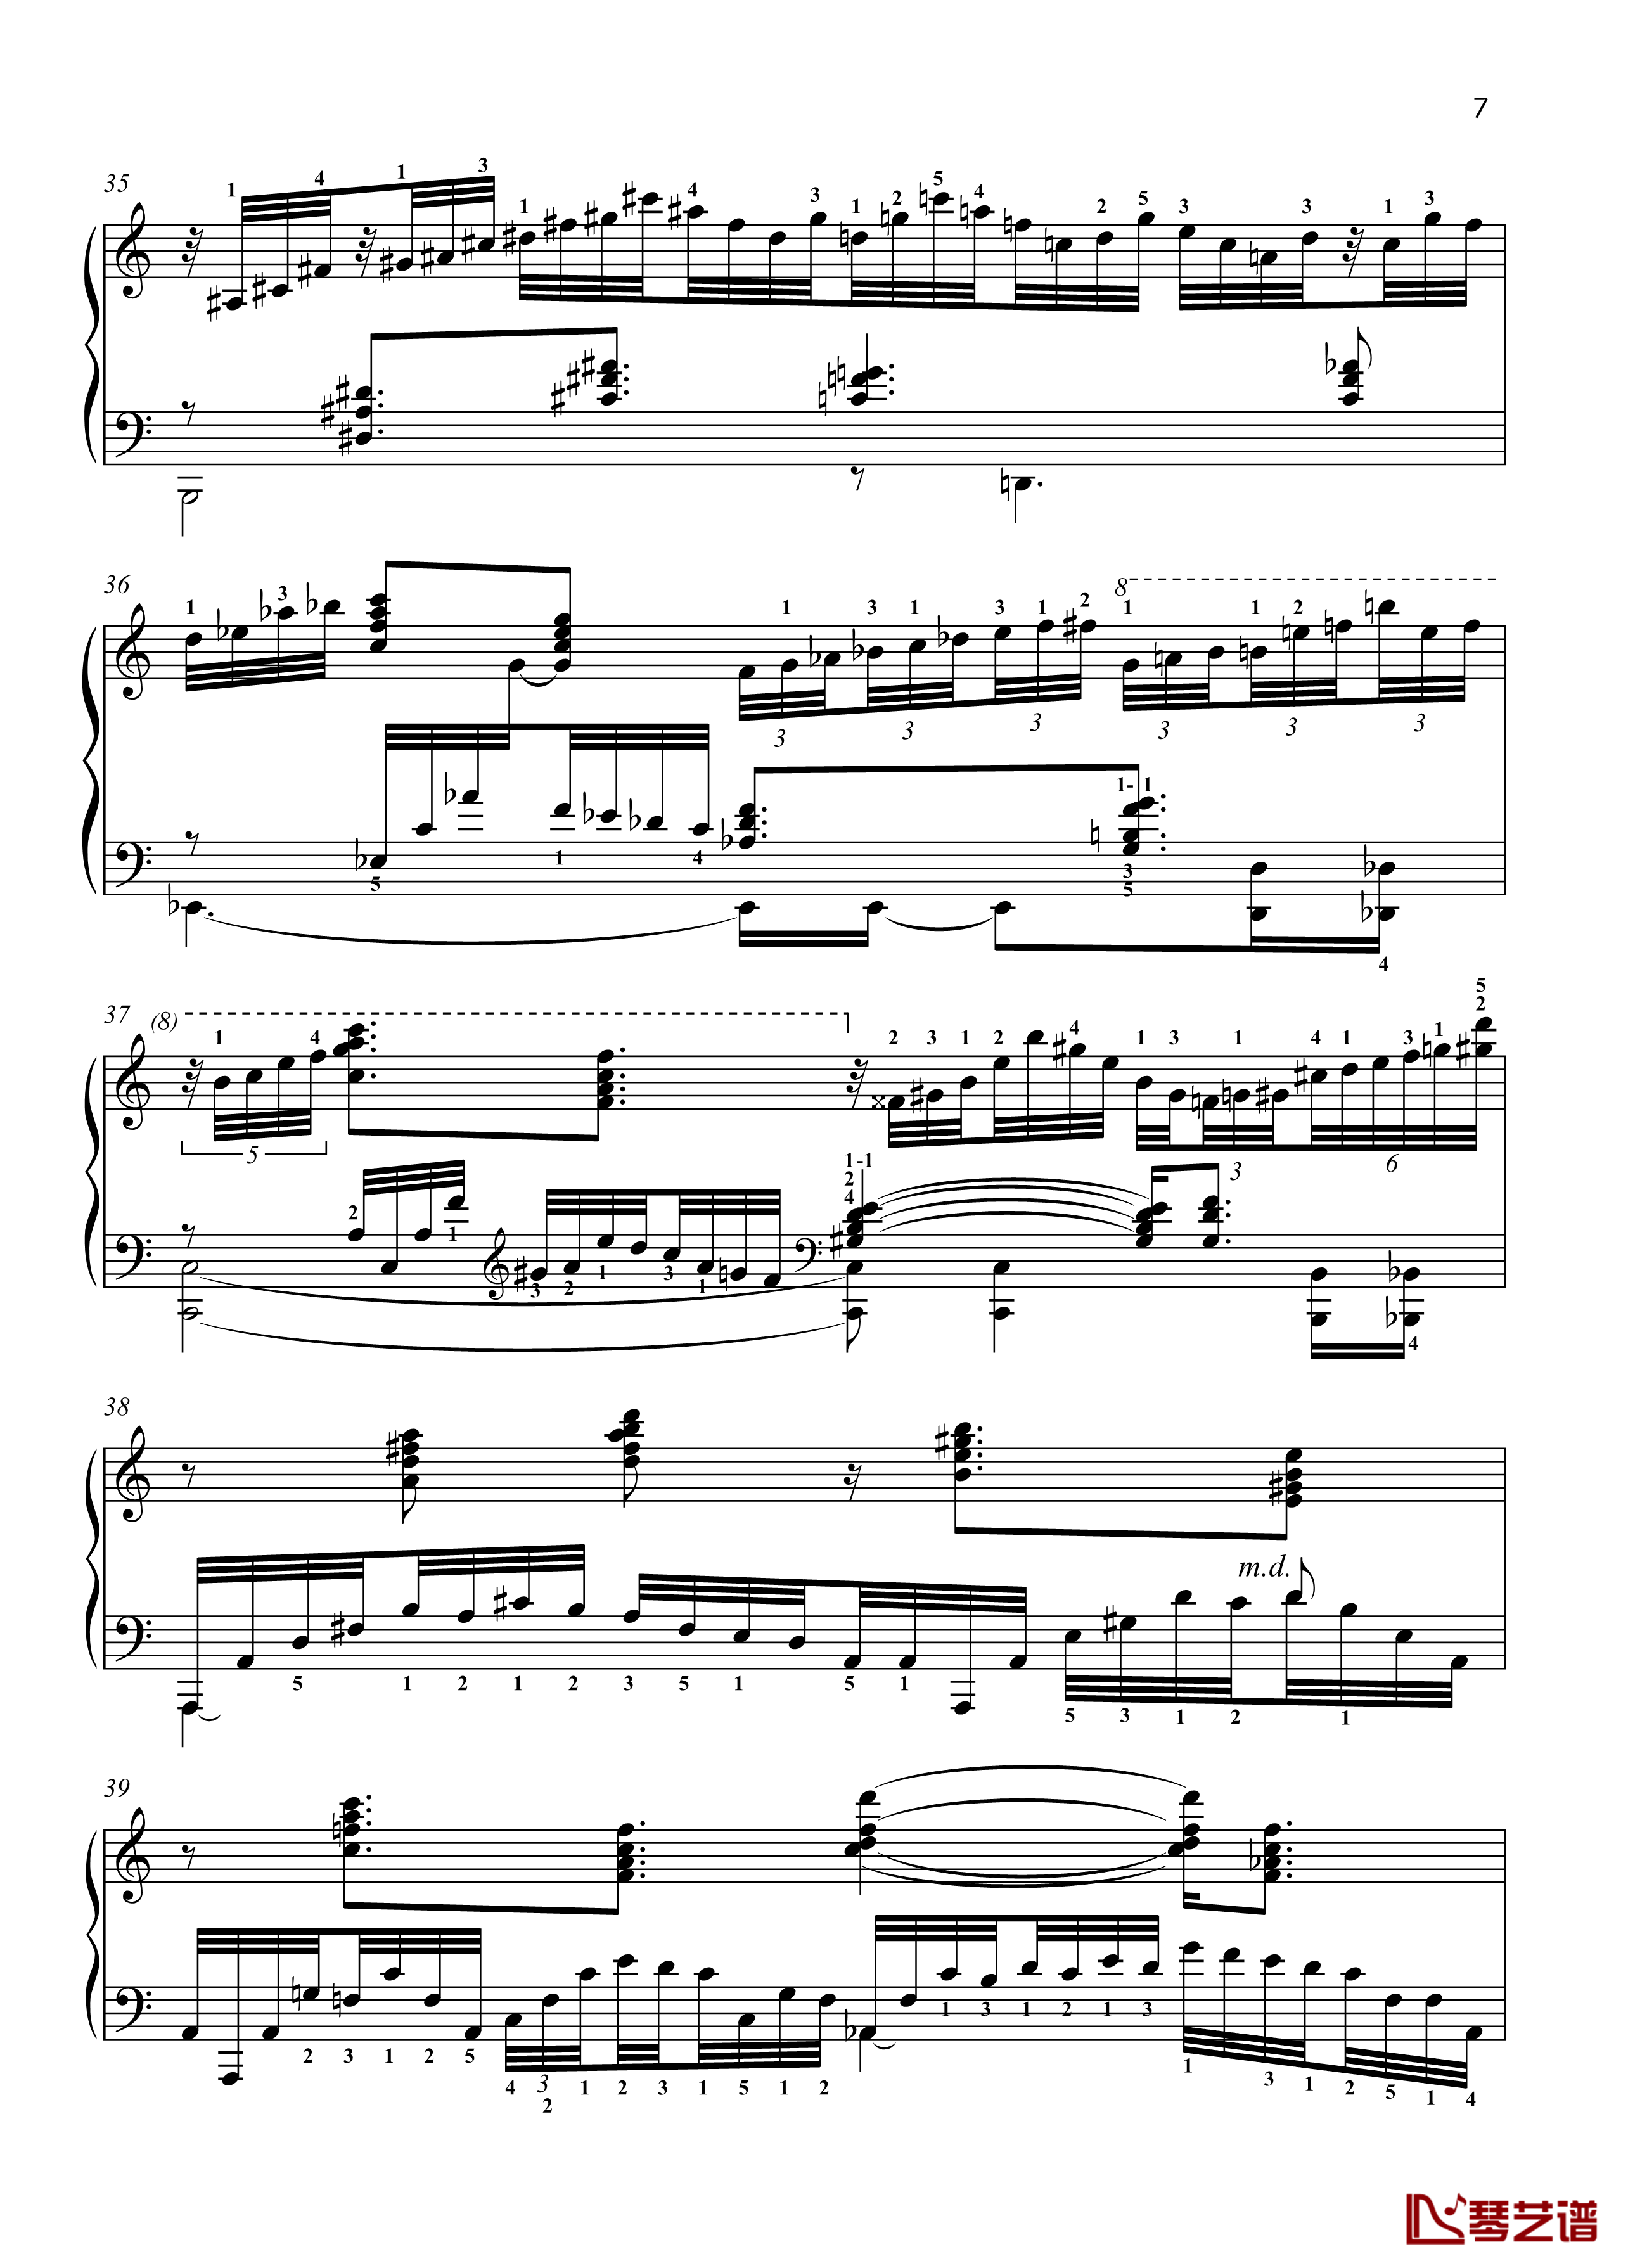 No. 4. Reminiscence钢琴谱-带指法-八首音乐会练习曲  Eight Concert ?tudes Op 40 - -爵士-尼古拉·凯帕斯汀7